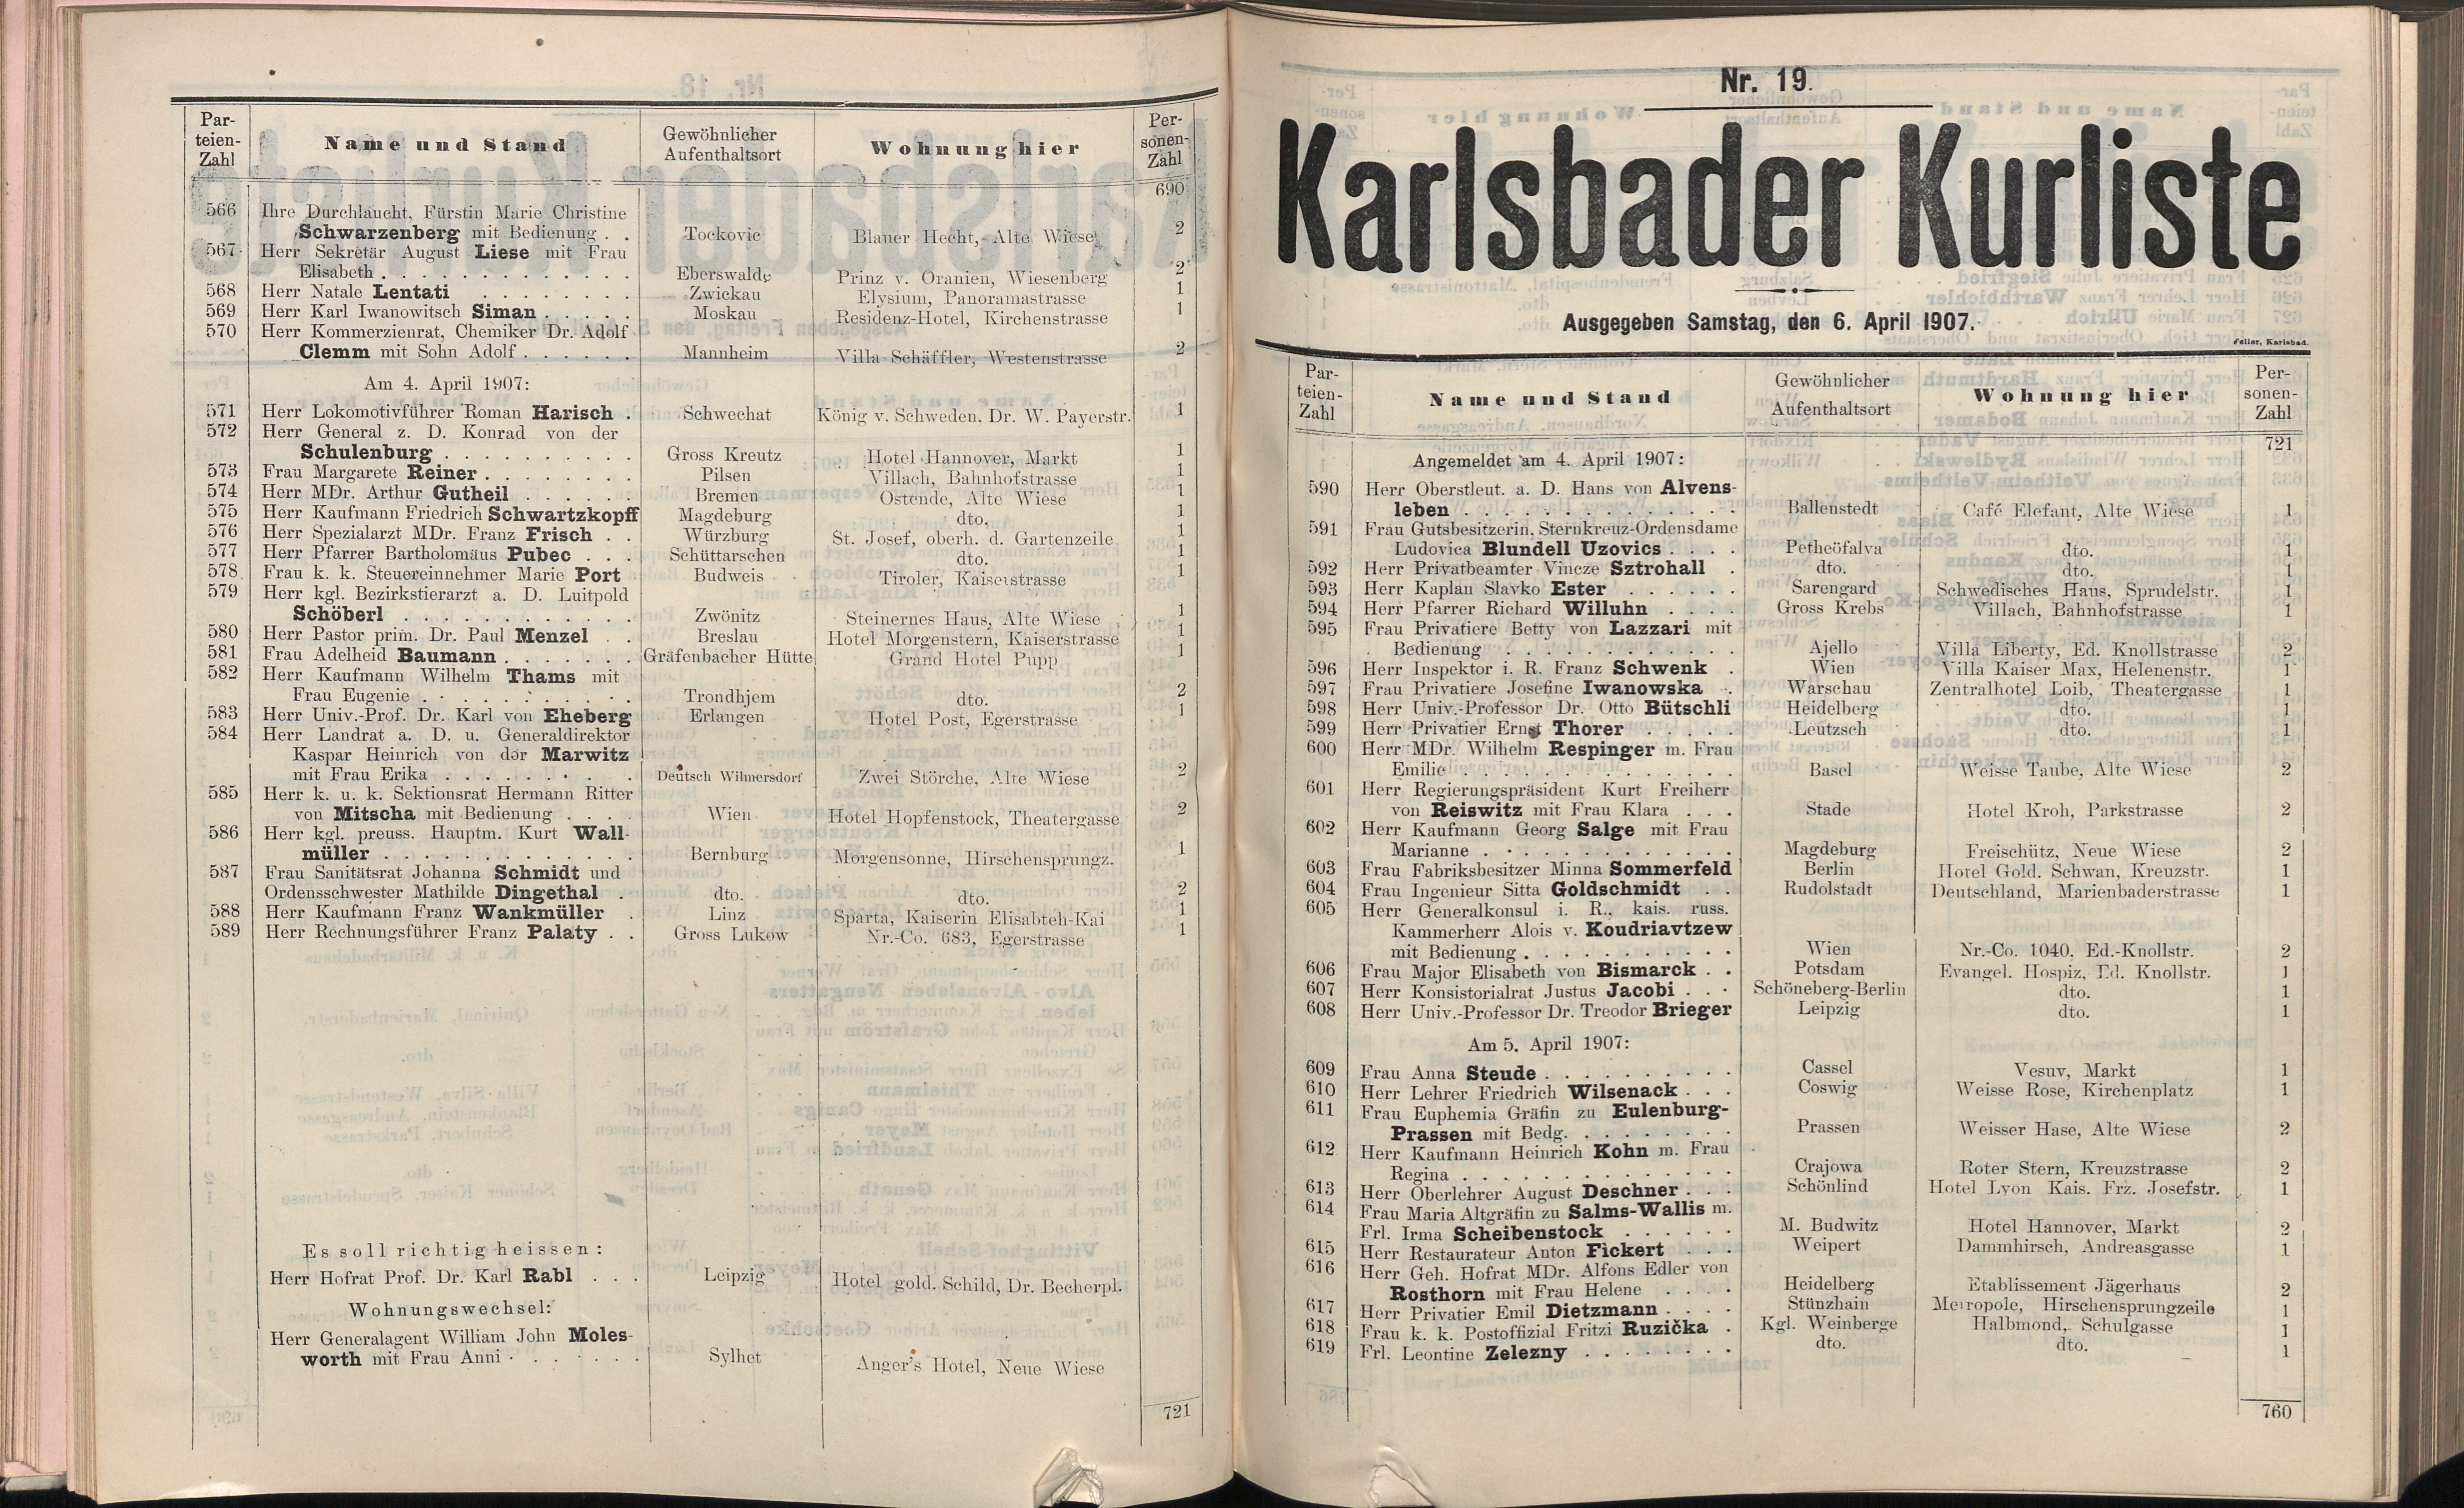 132. soap-kv_knihovna_karlsbader-kurliste-1907_1330